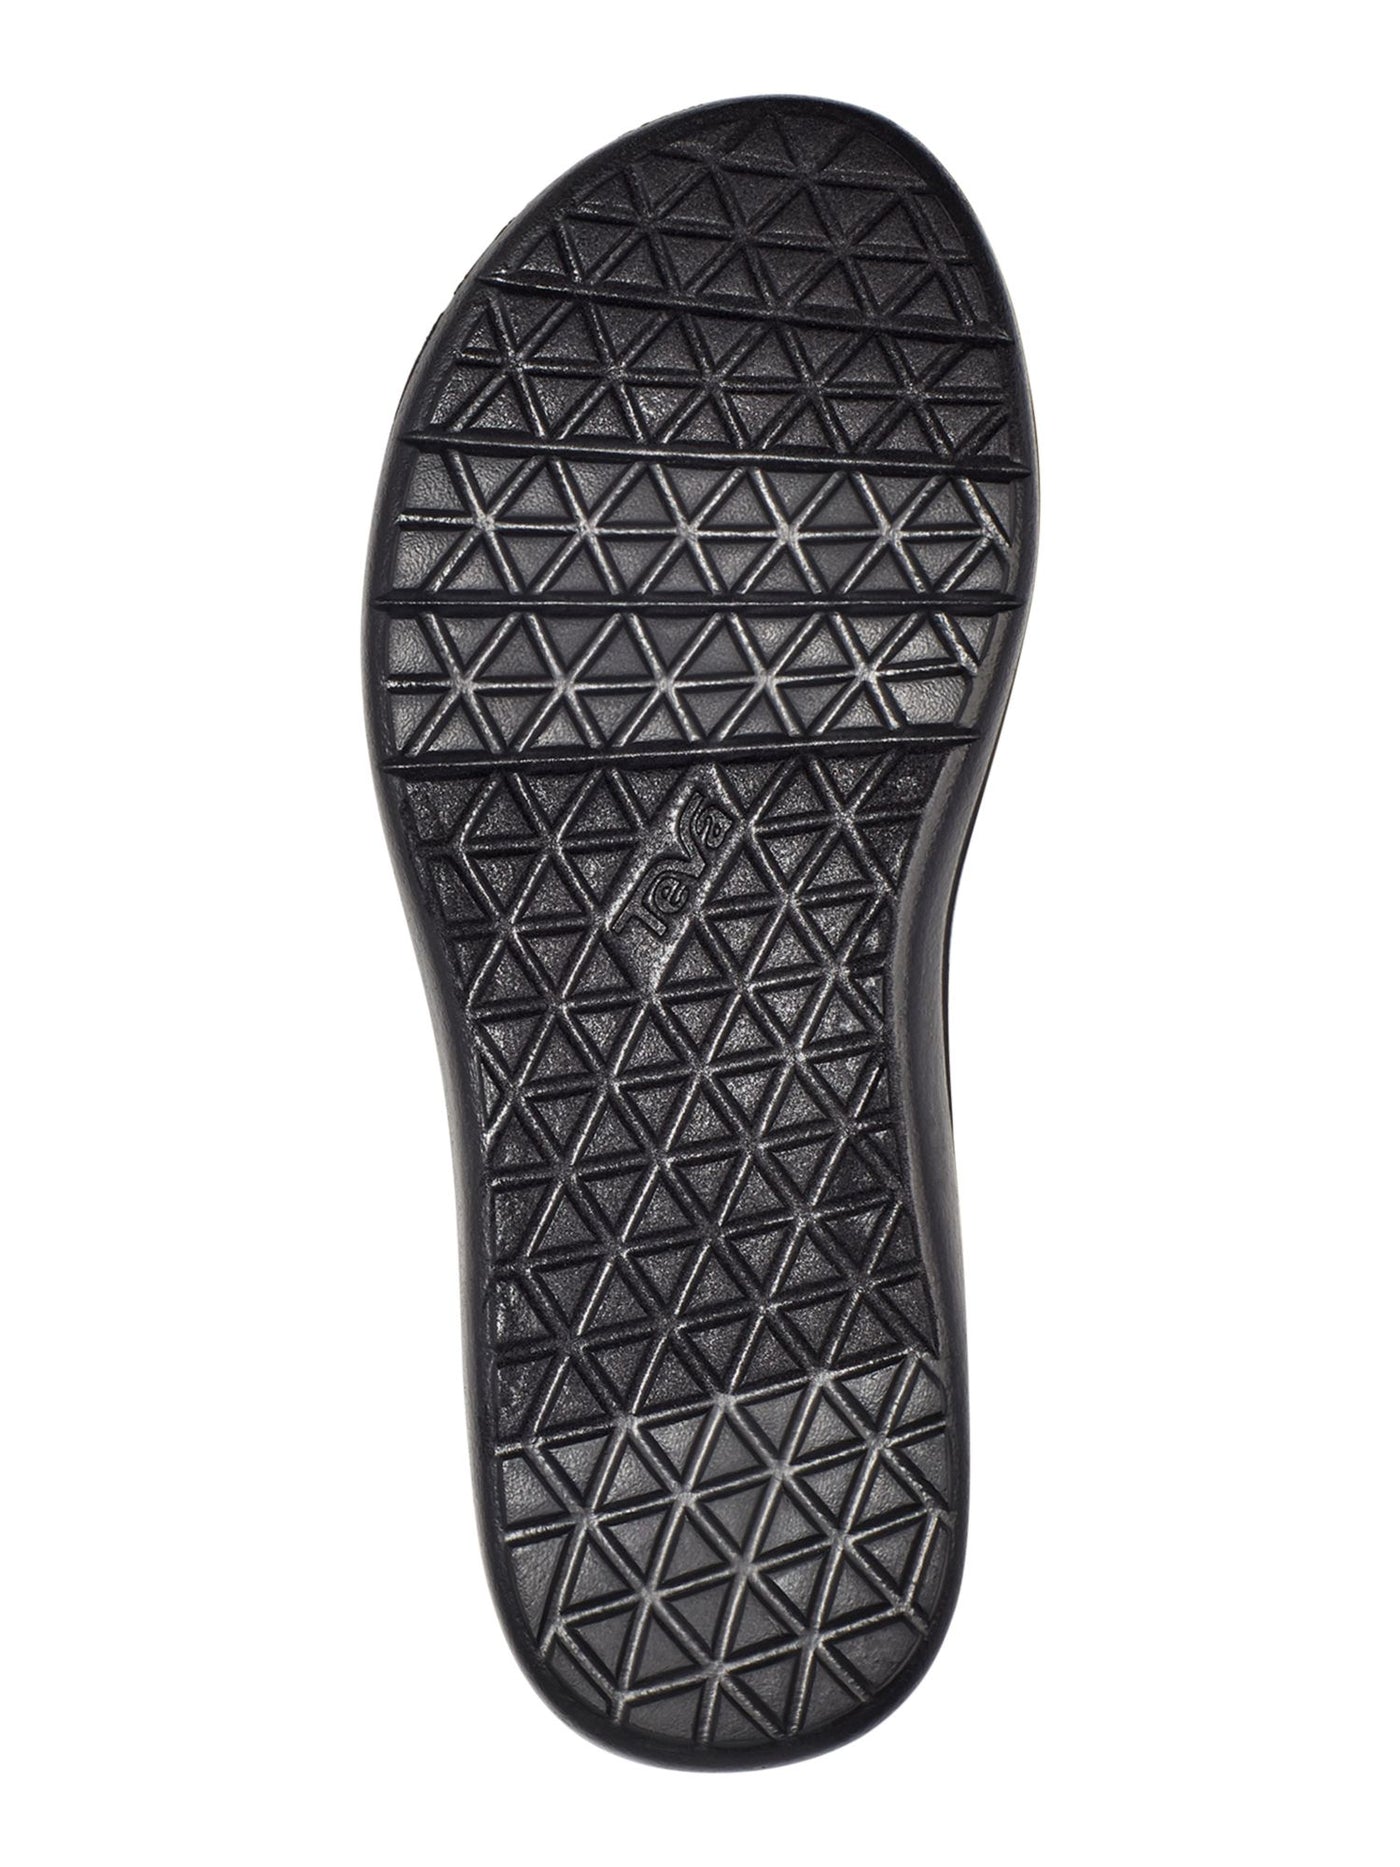 TEVA Womens Black Colorblocked Stripe Cushioned Odor Control Voya Round Toe Slip On Flip Flop Sandal 5